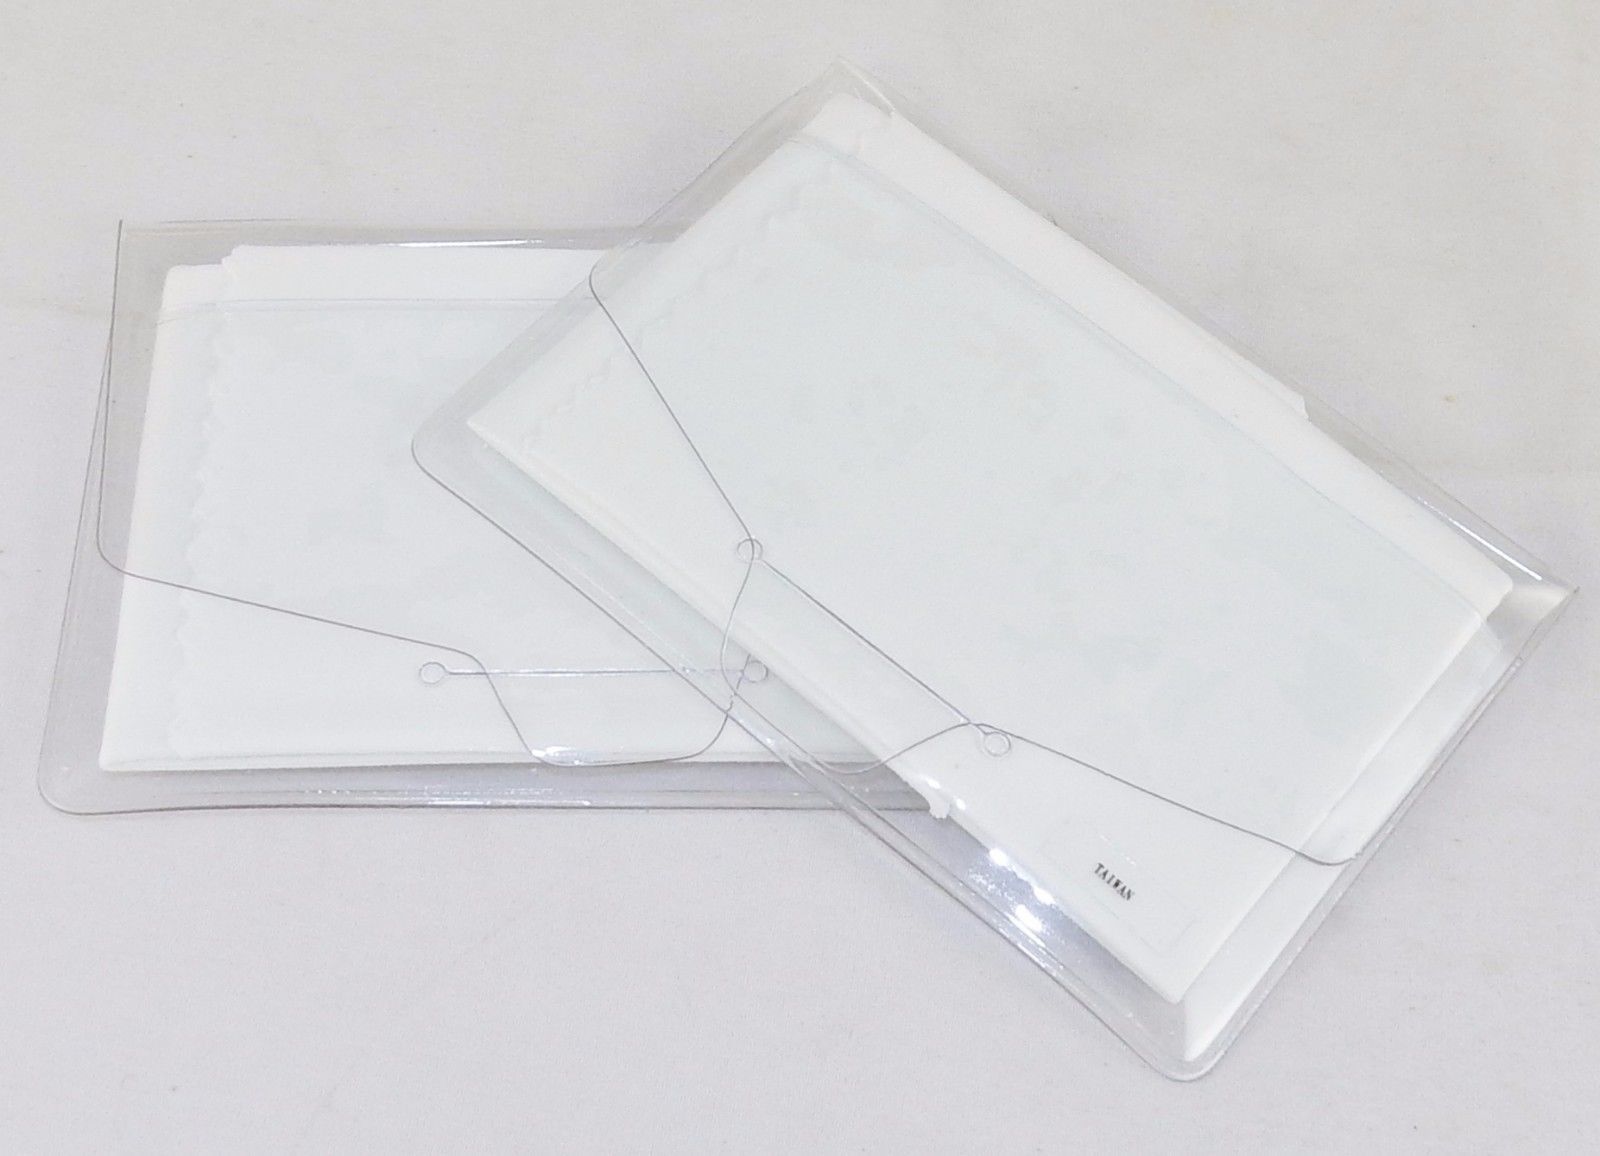 2-Pack Lens Cloths, White Microfiber 7" x 9", For Glasses, TV, Cameras, Phones - $4.85